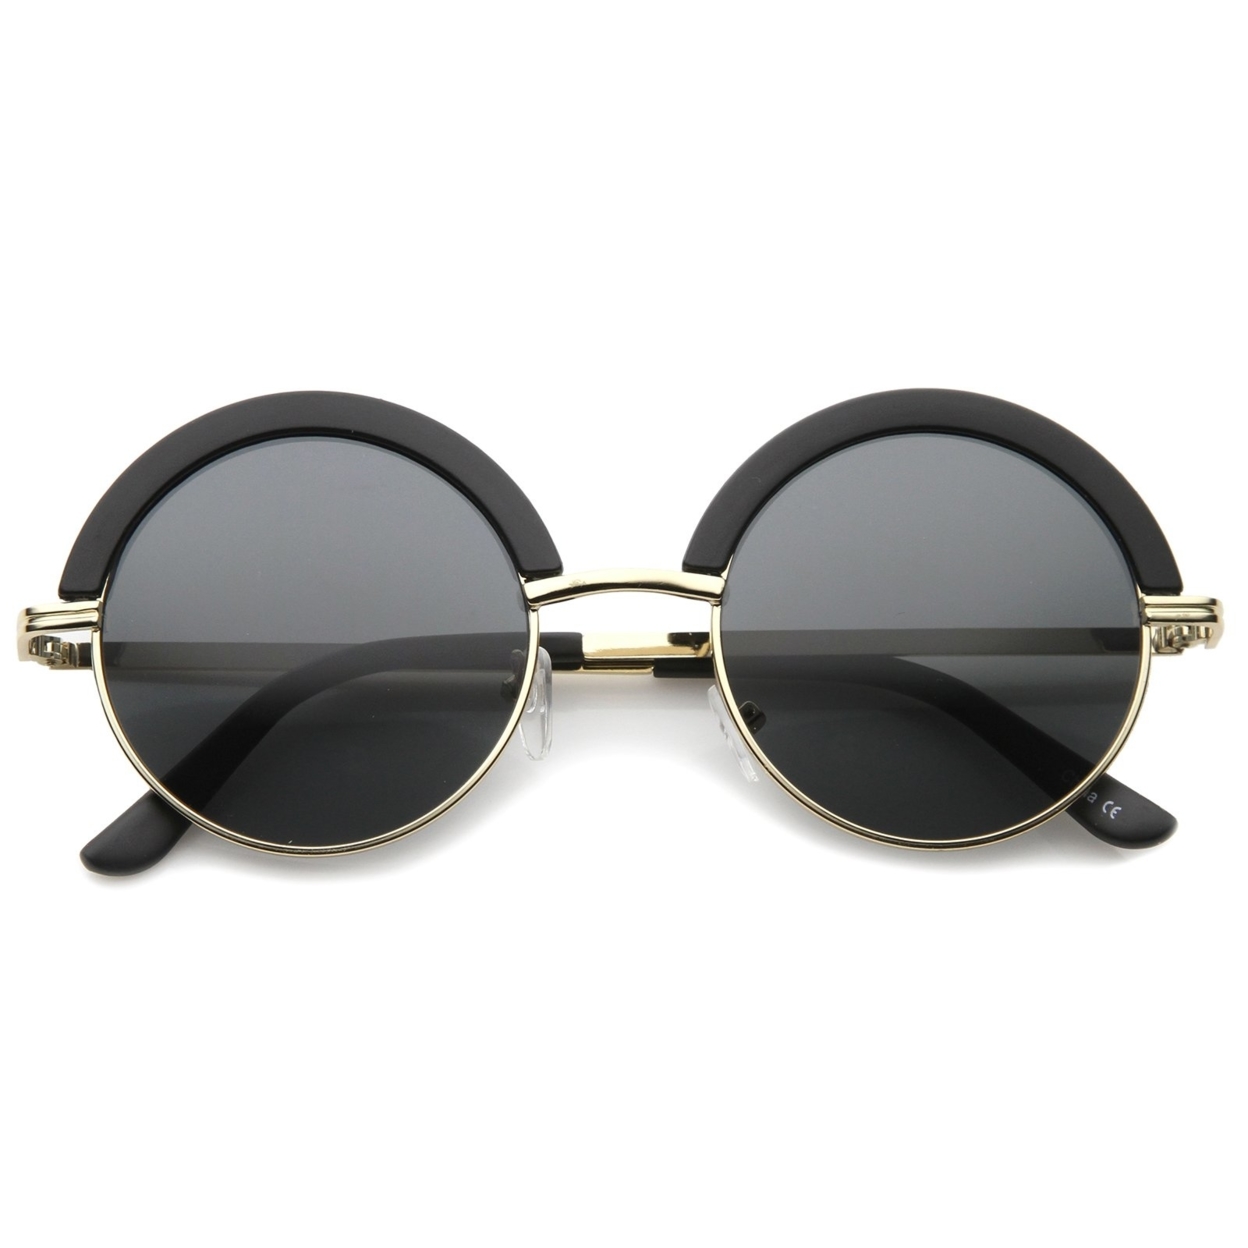 Mod Fashion Oversize Half-Frame Brow Eyelid Round Sunglasses 50mm - Shiny Black-Gunmetal / Green